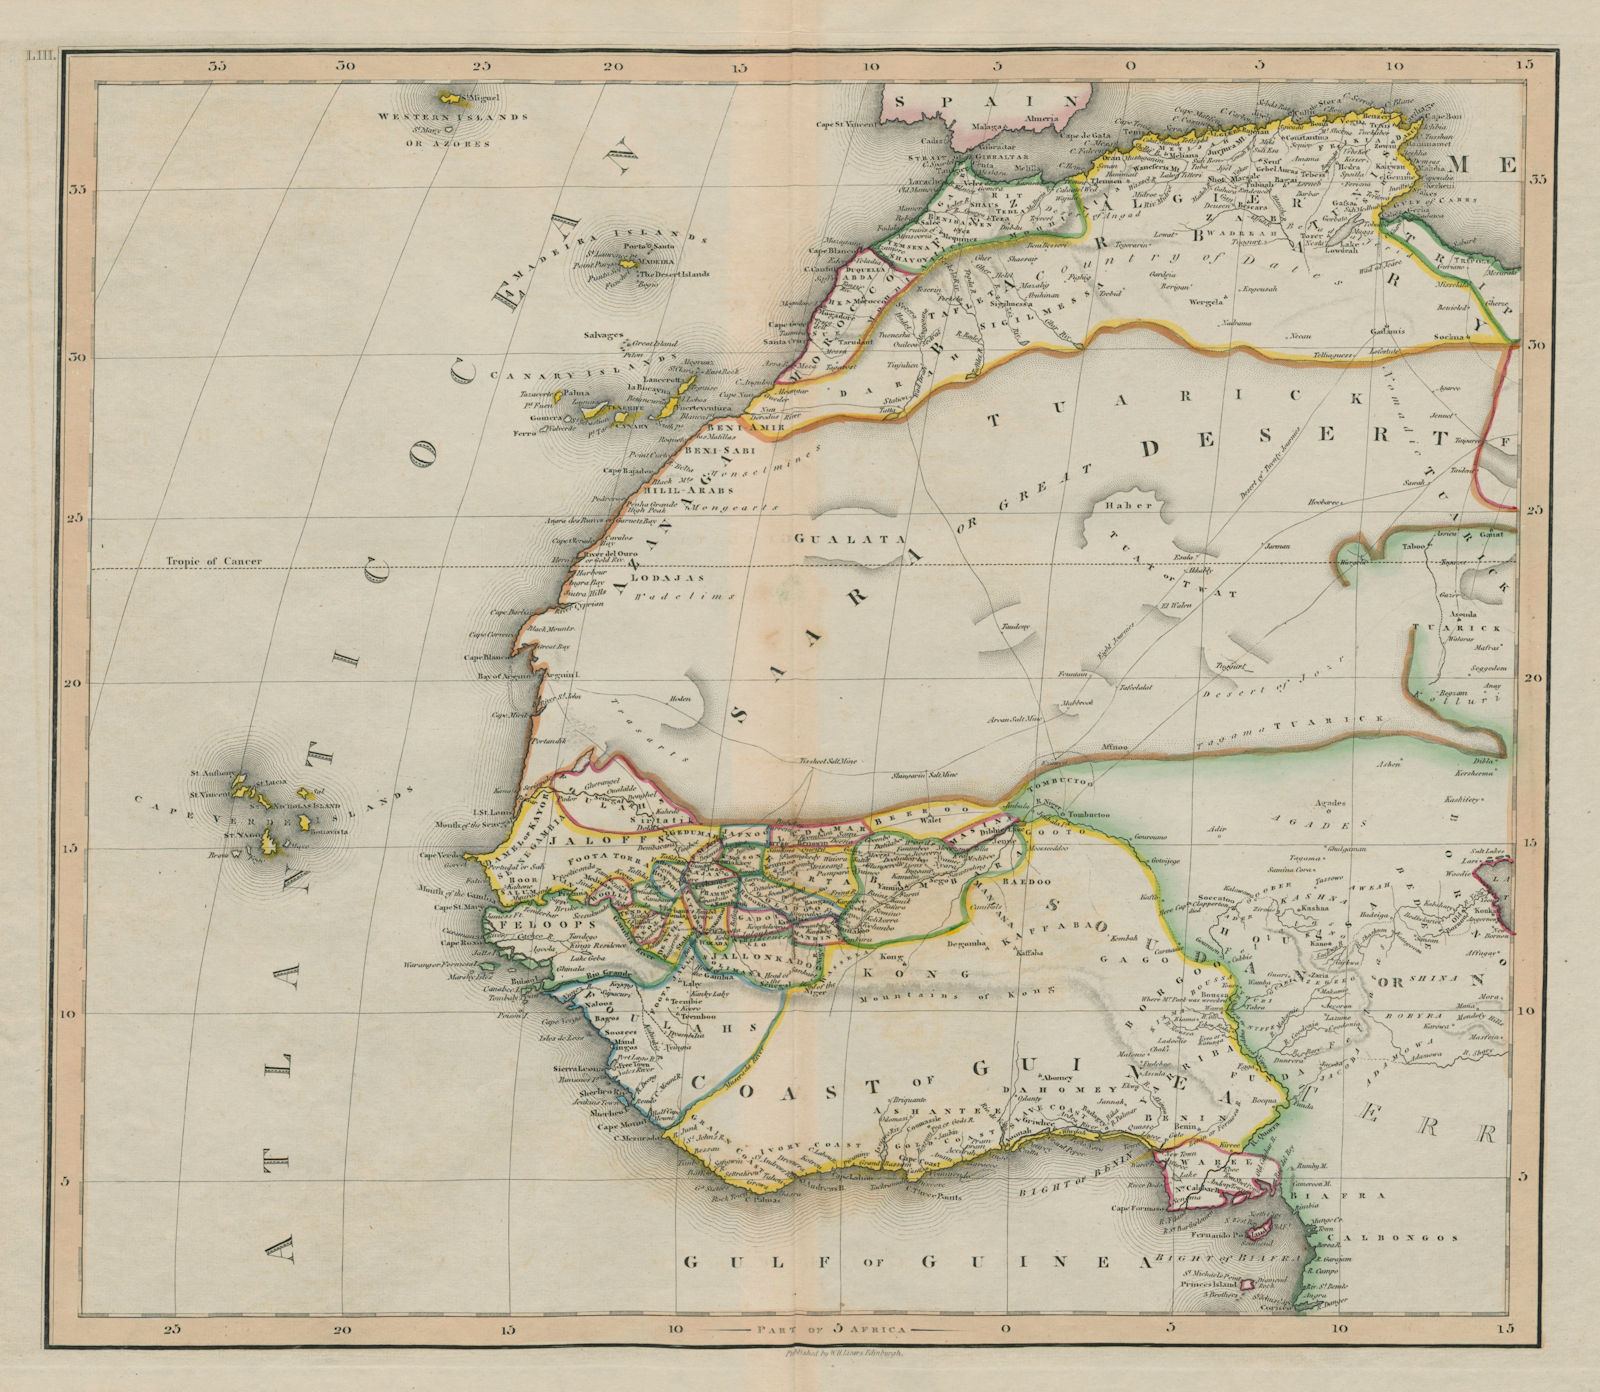 West Africa. Sahara caravan routes. Tribes Kingdoms Empires. LIZARS 1842 map